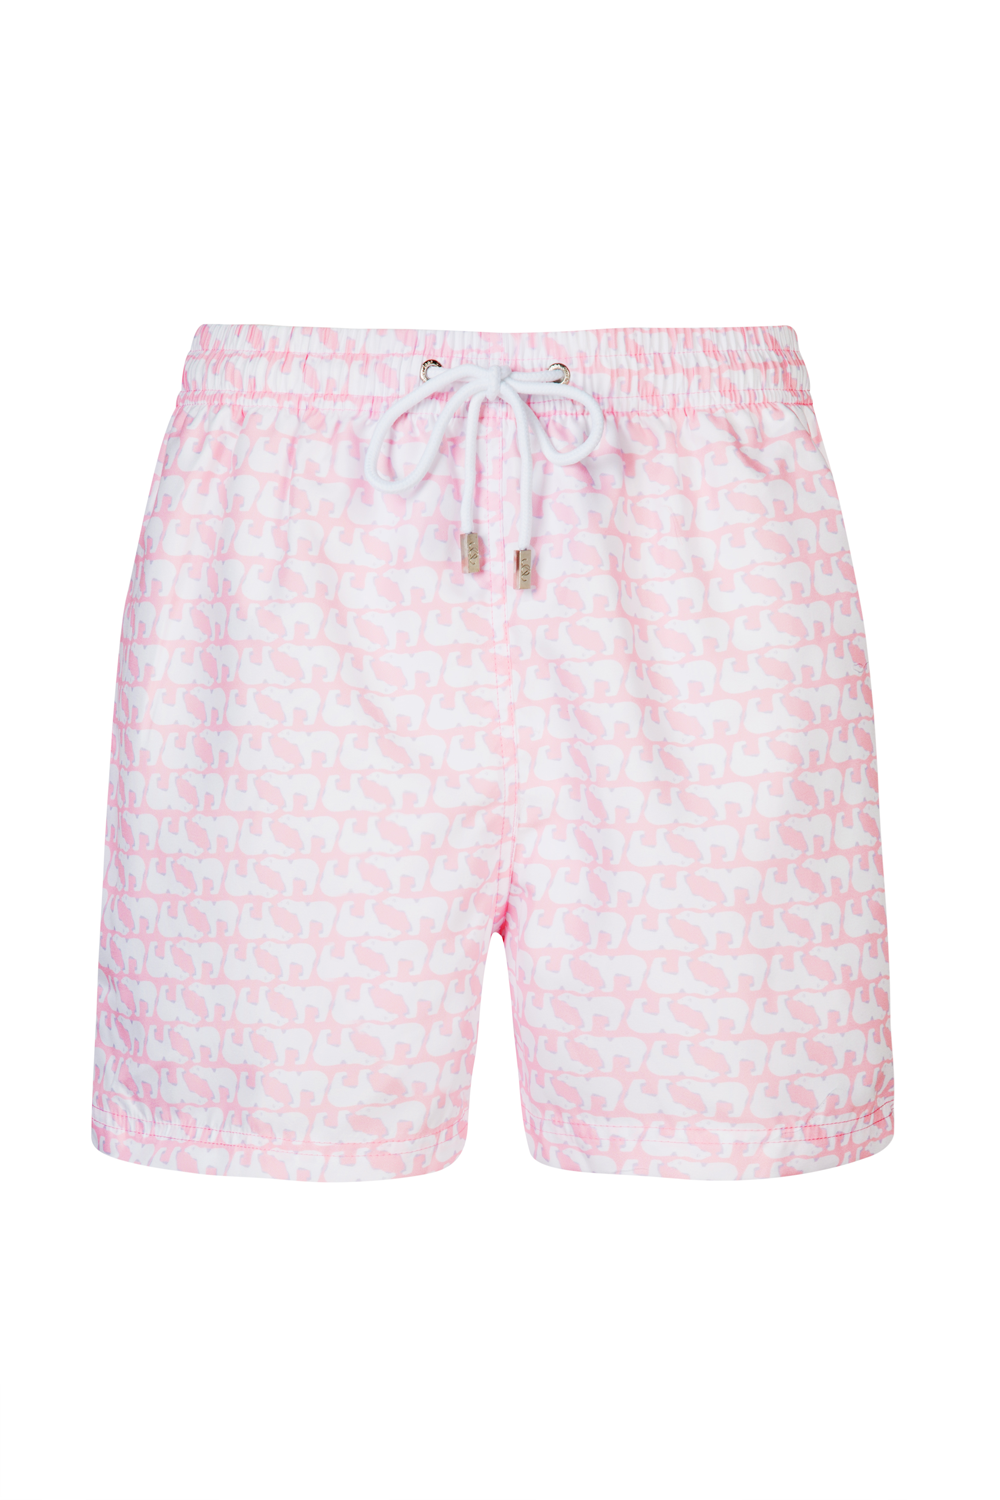 The Haggy Bear Pink Swim Short